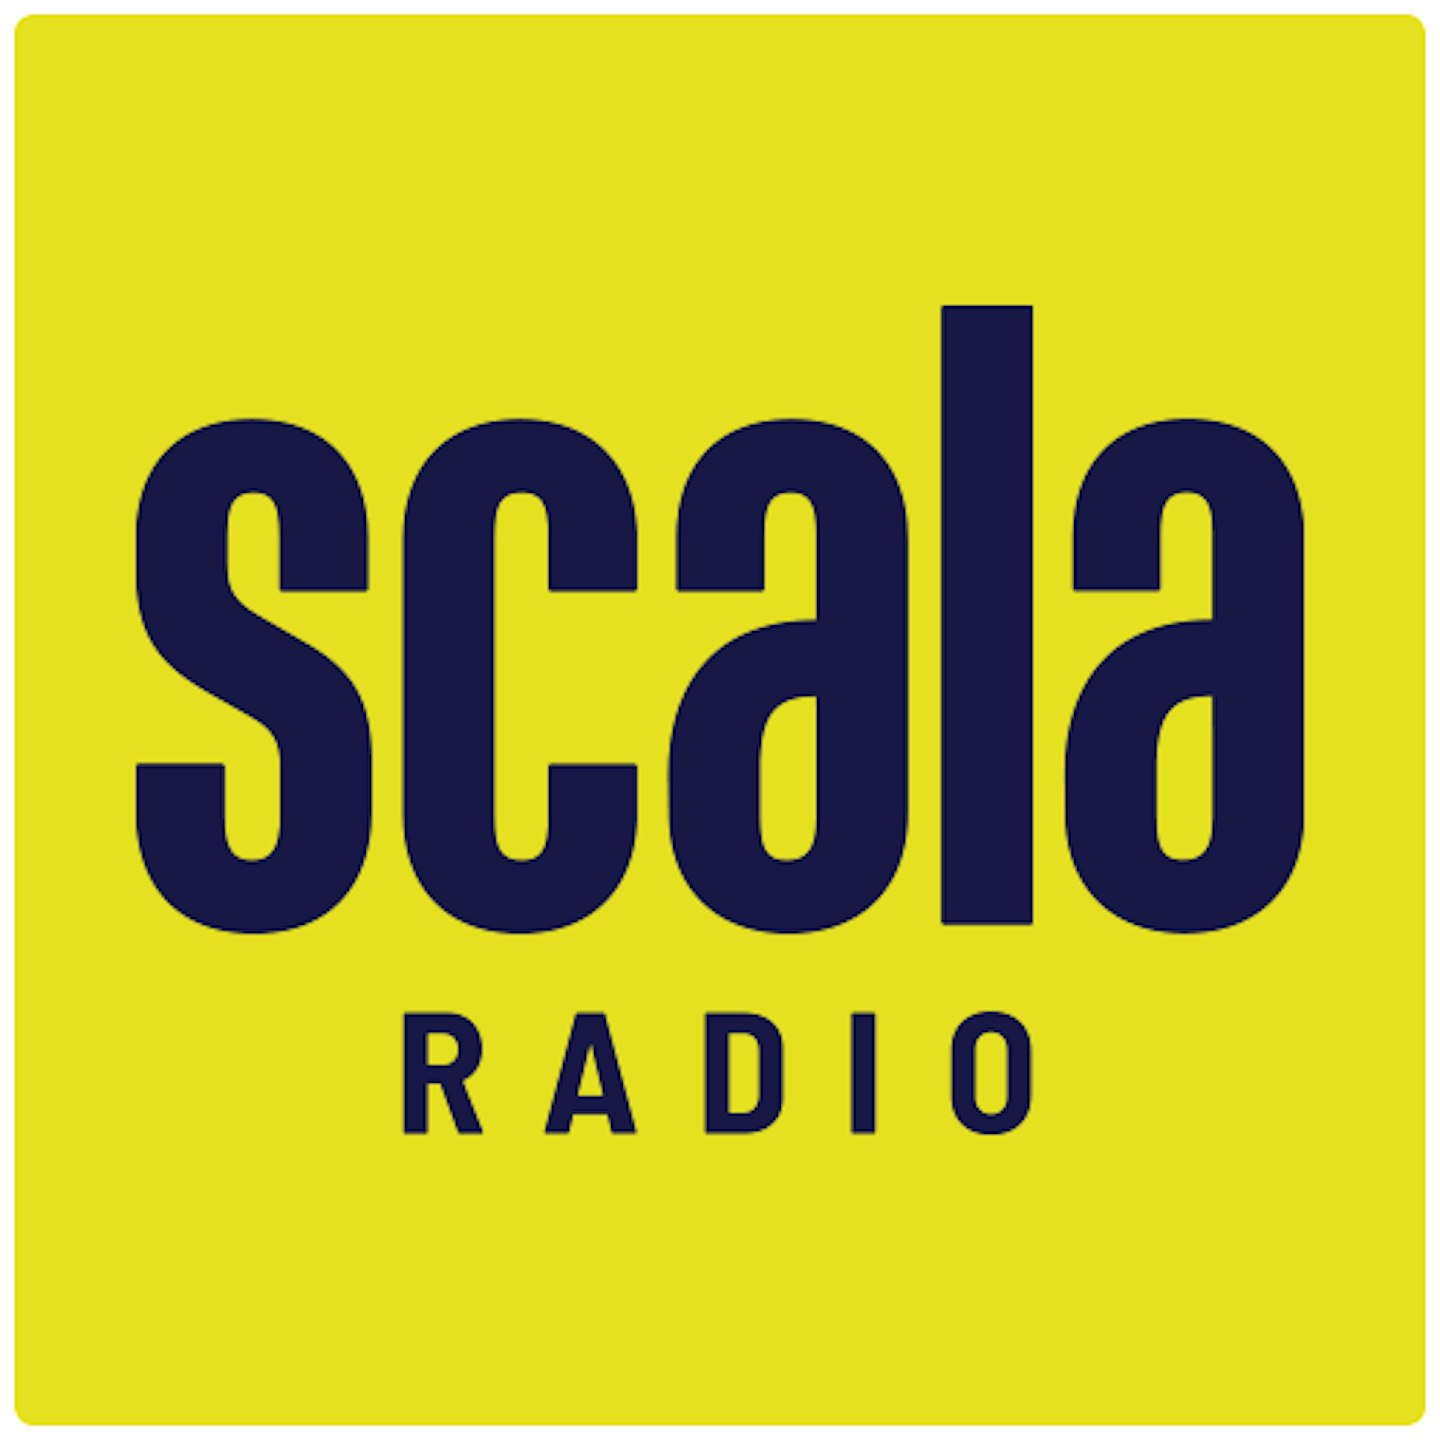 Scala Radio